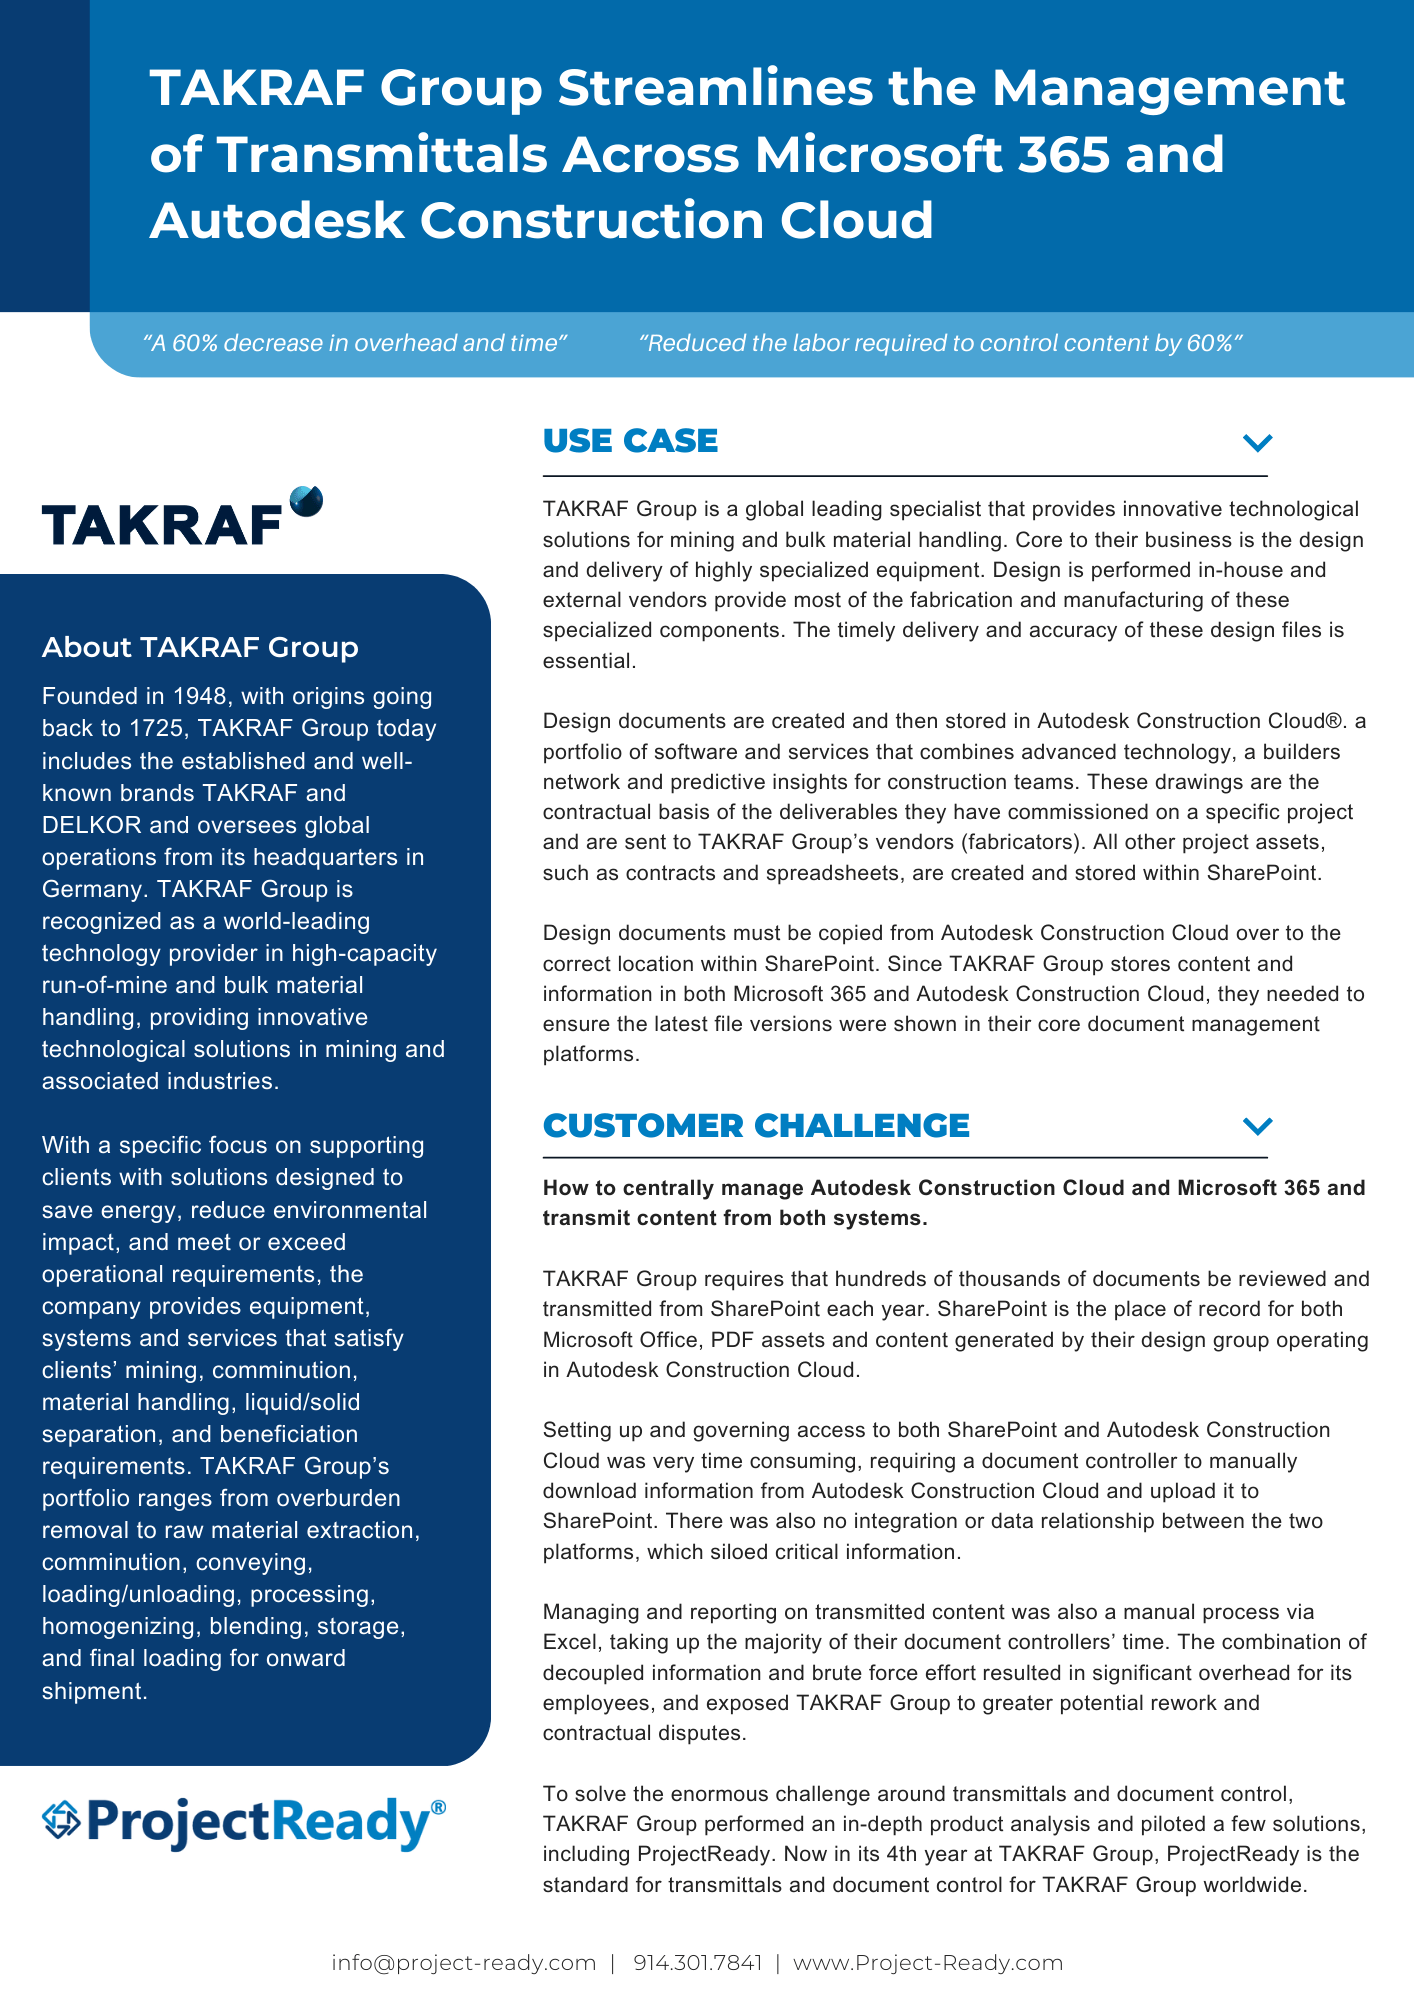 Takraf Case Study - Microsoft 365 and Autodesk Construction Cloud | ProjectReady